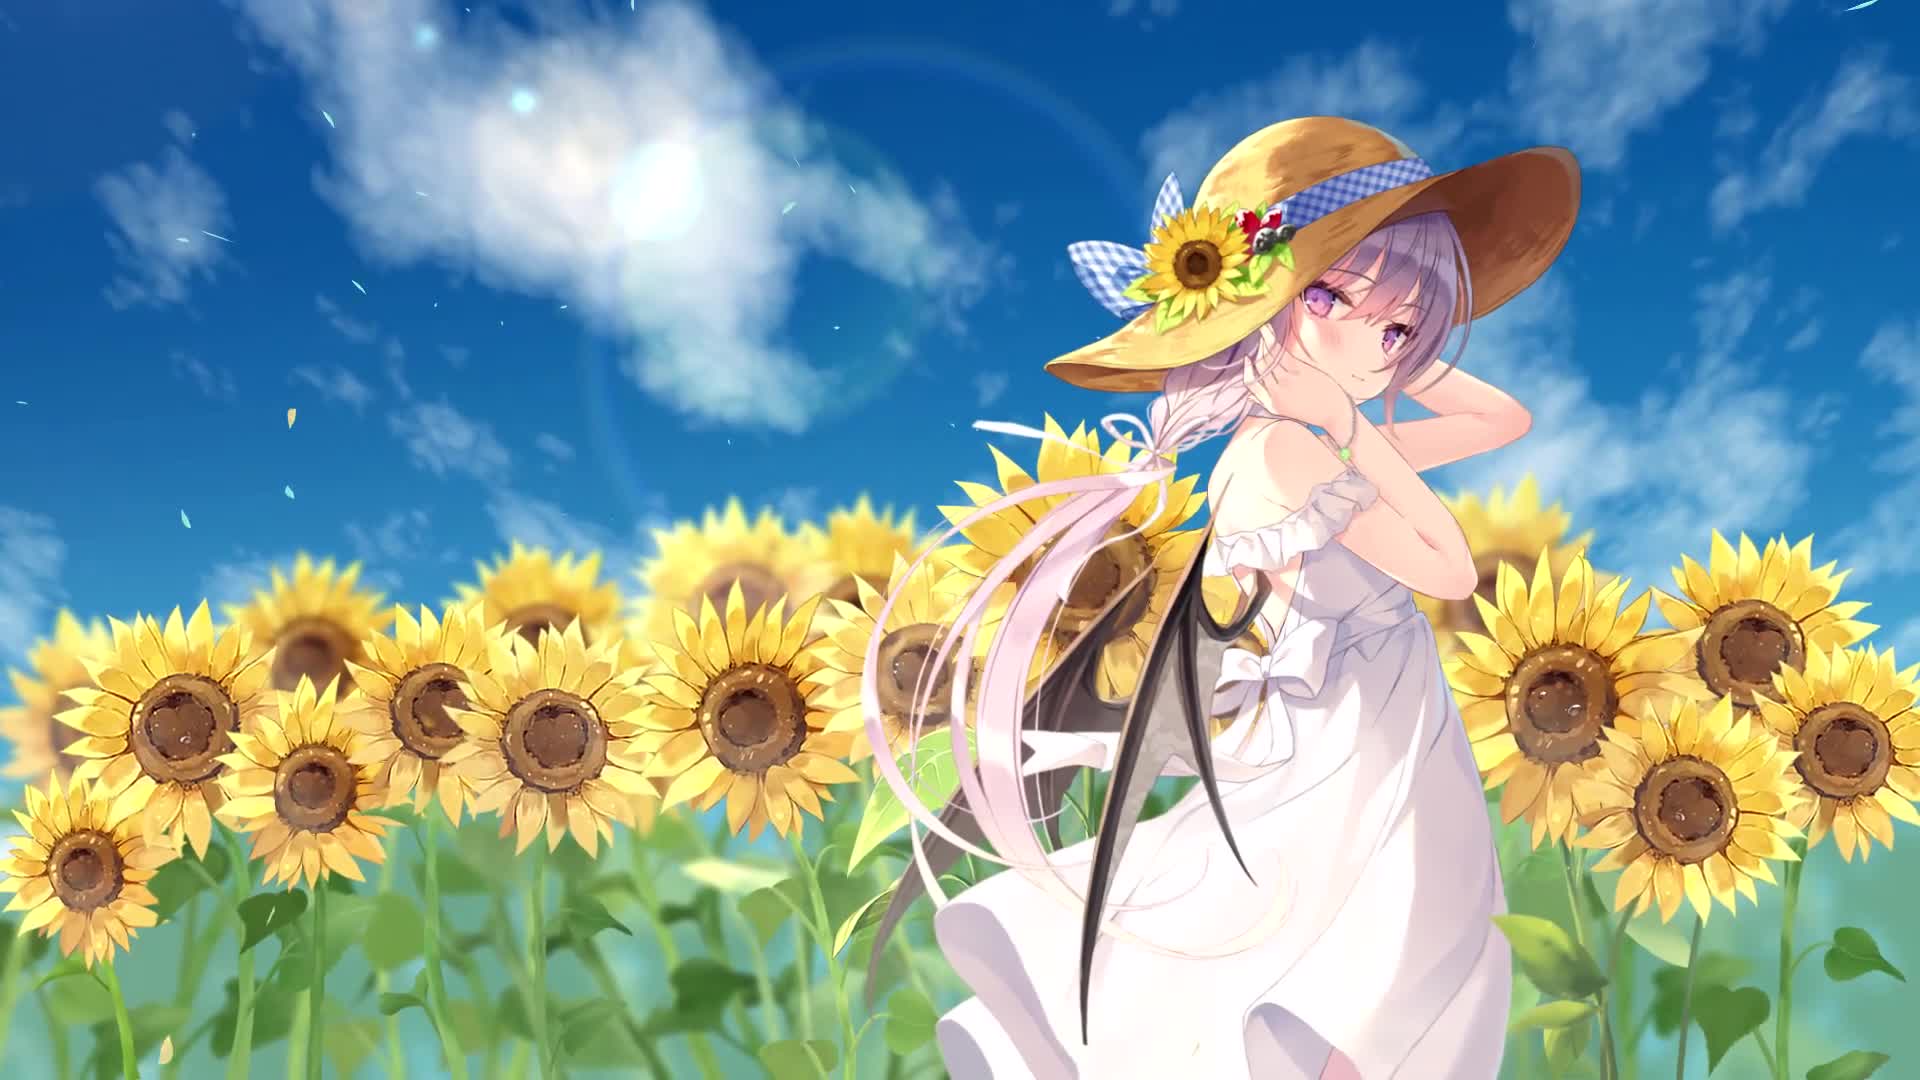 Cute Anime Girl and Sunflowers Desktop Wallpaper